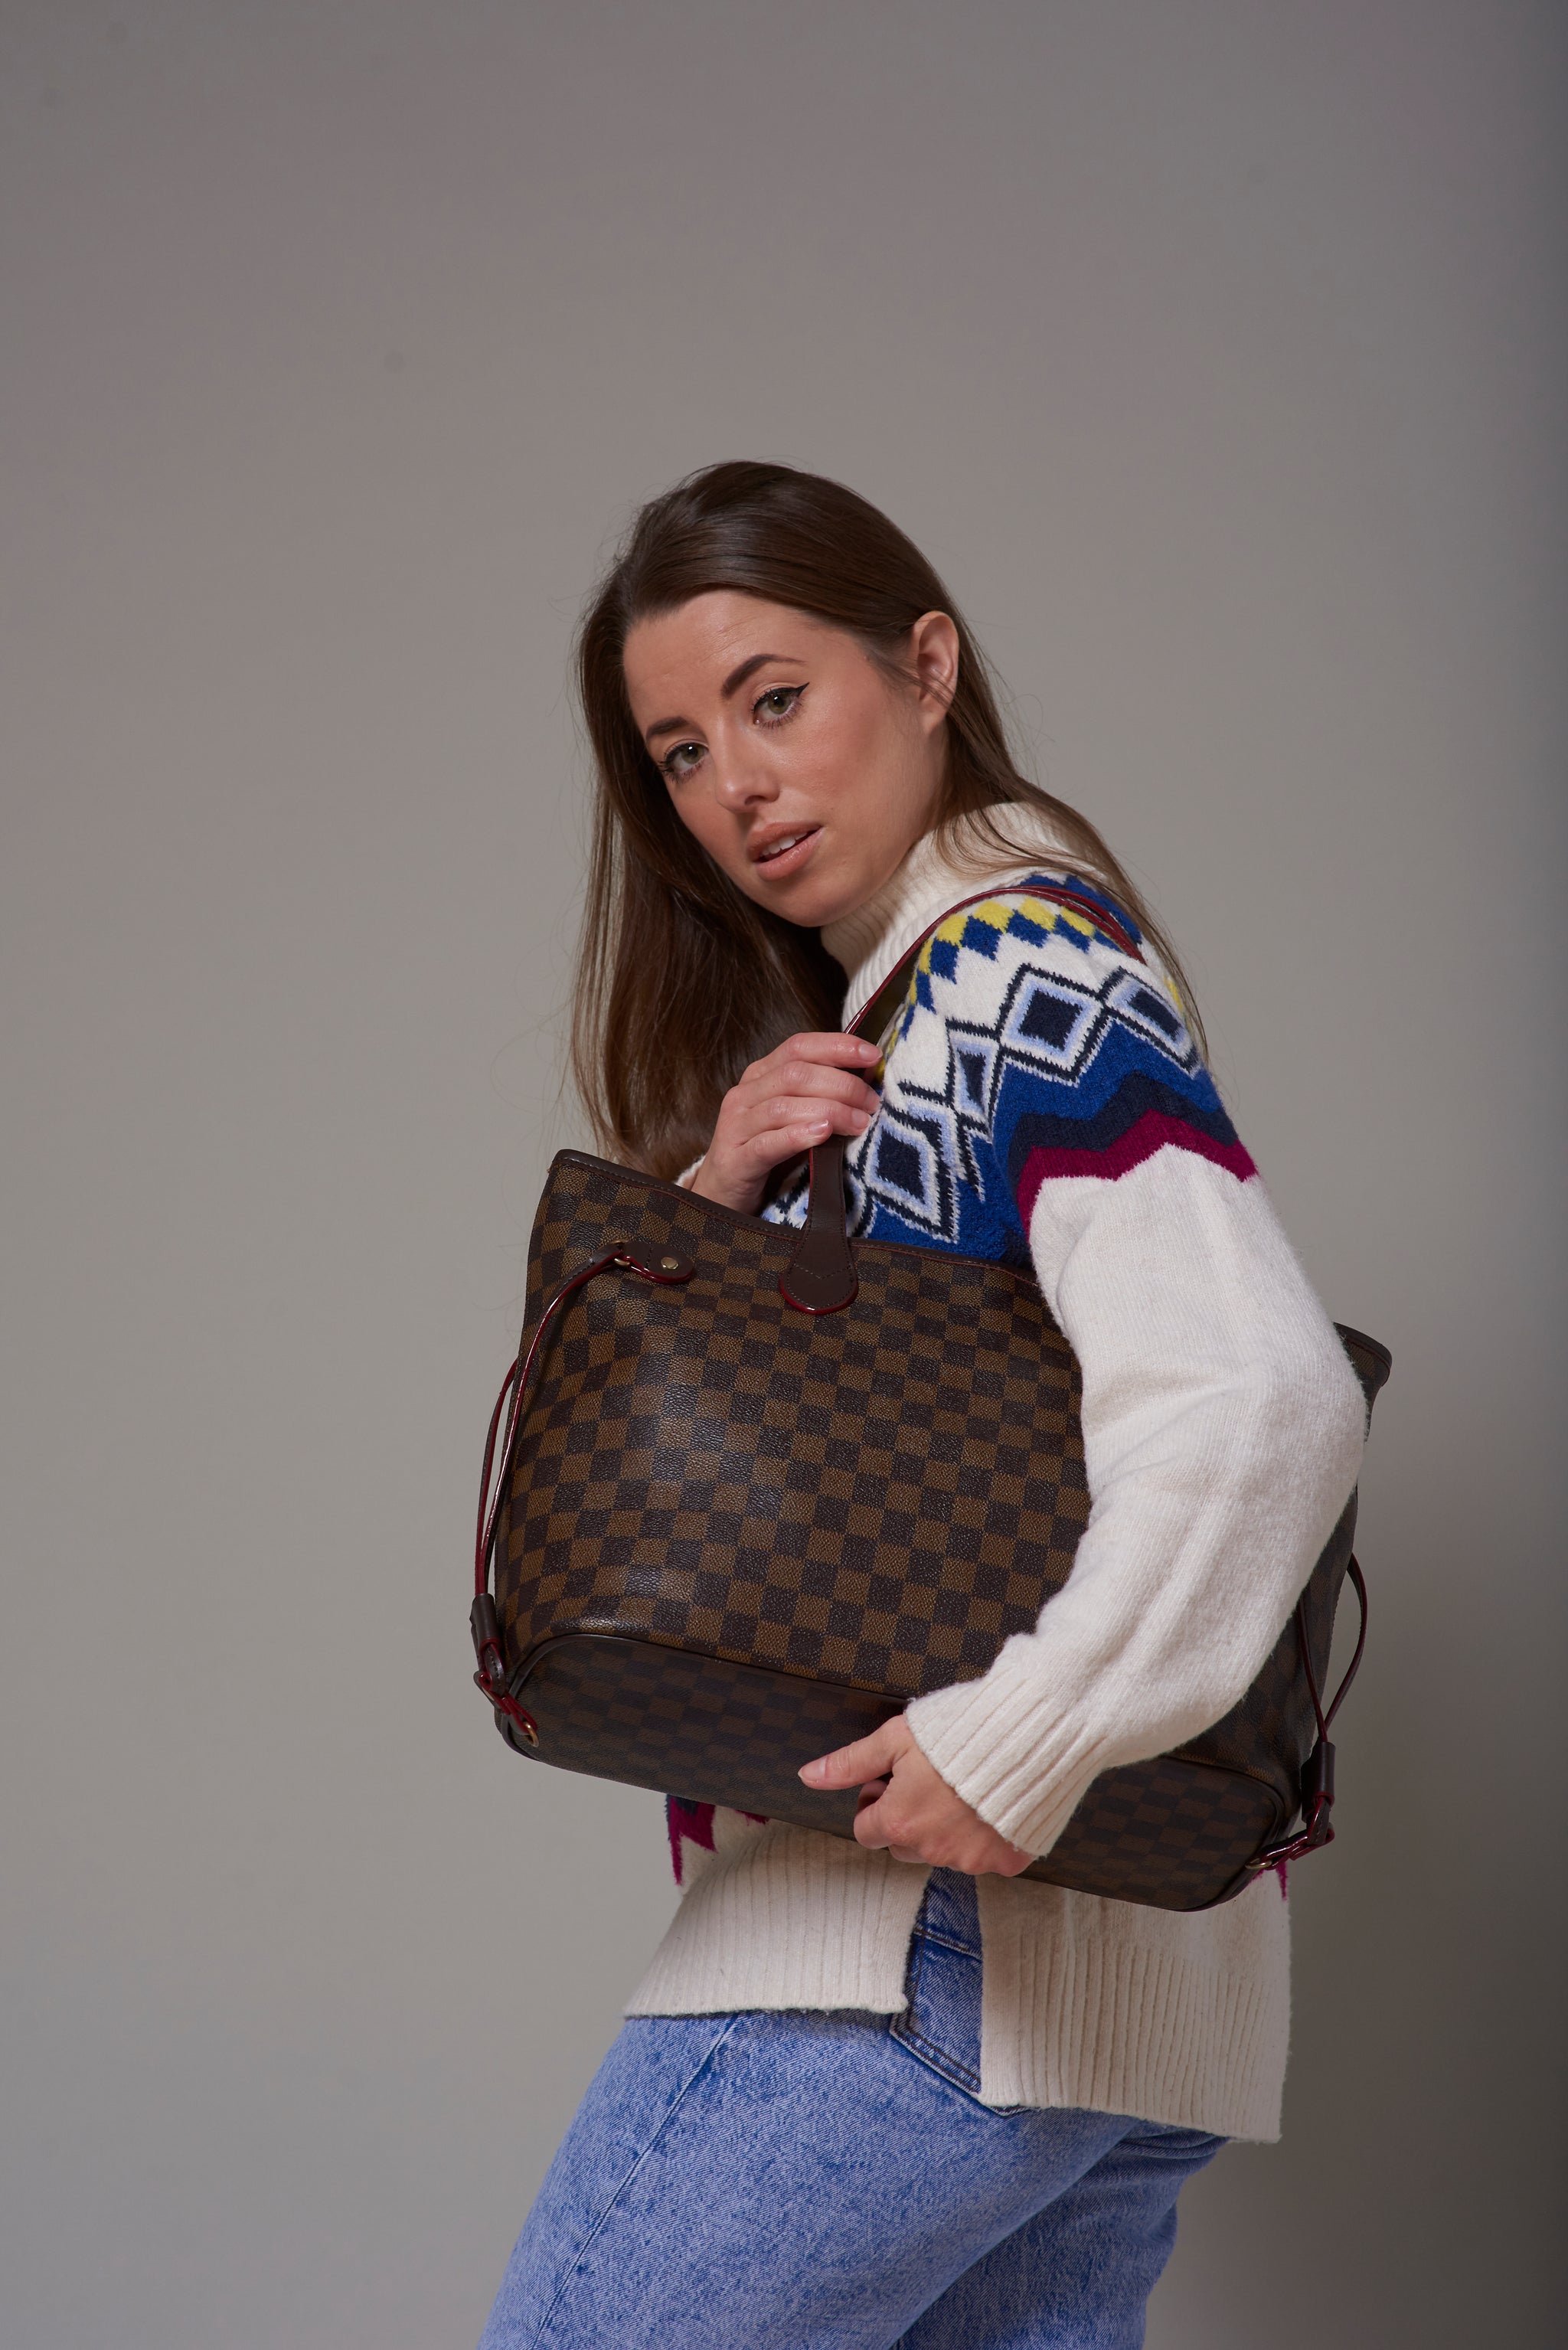 Louis Vuitton Tote Checkered Bags & Handbags for Women